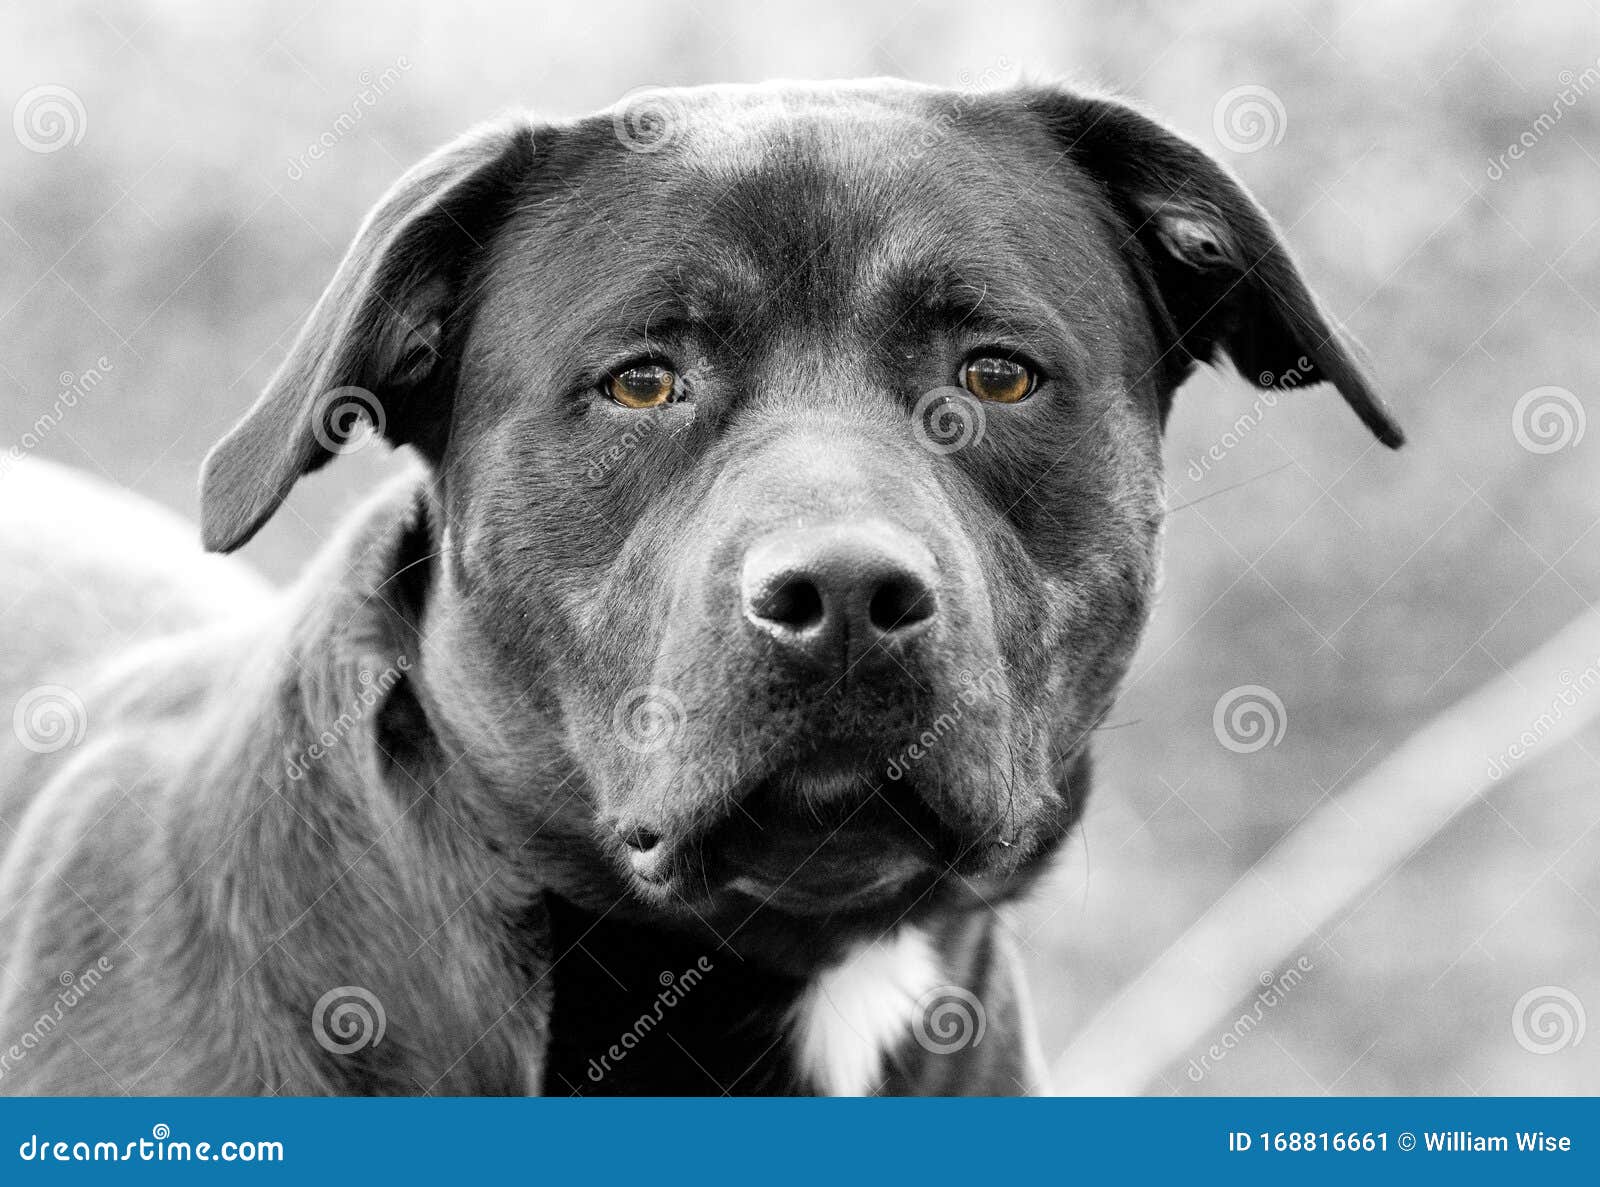 Top 97+ imagen black and white rottweiler